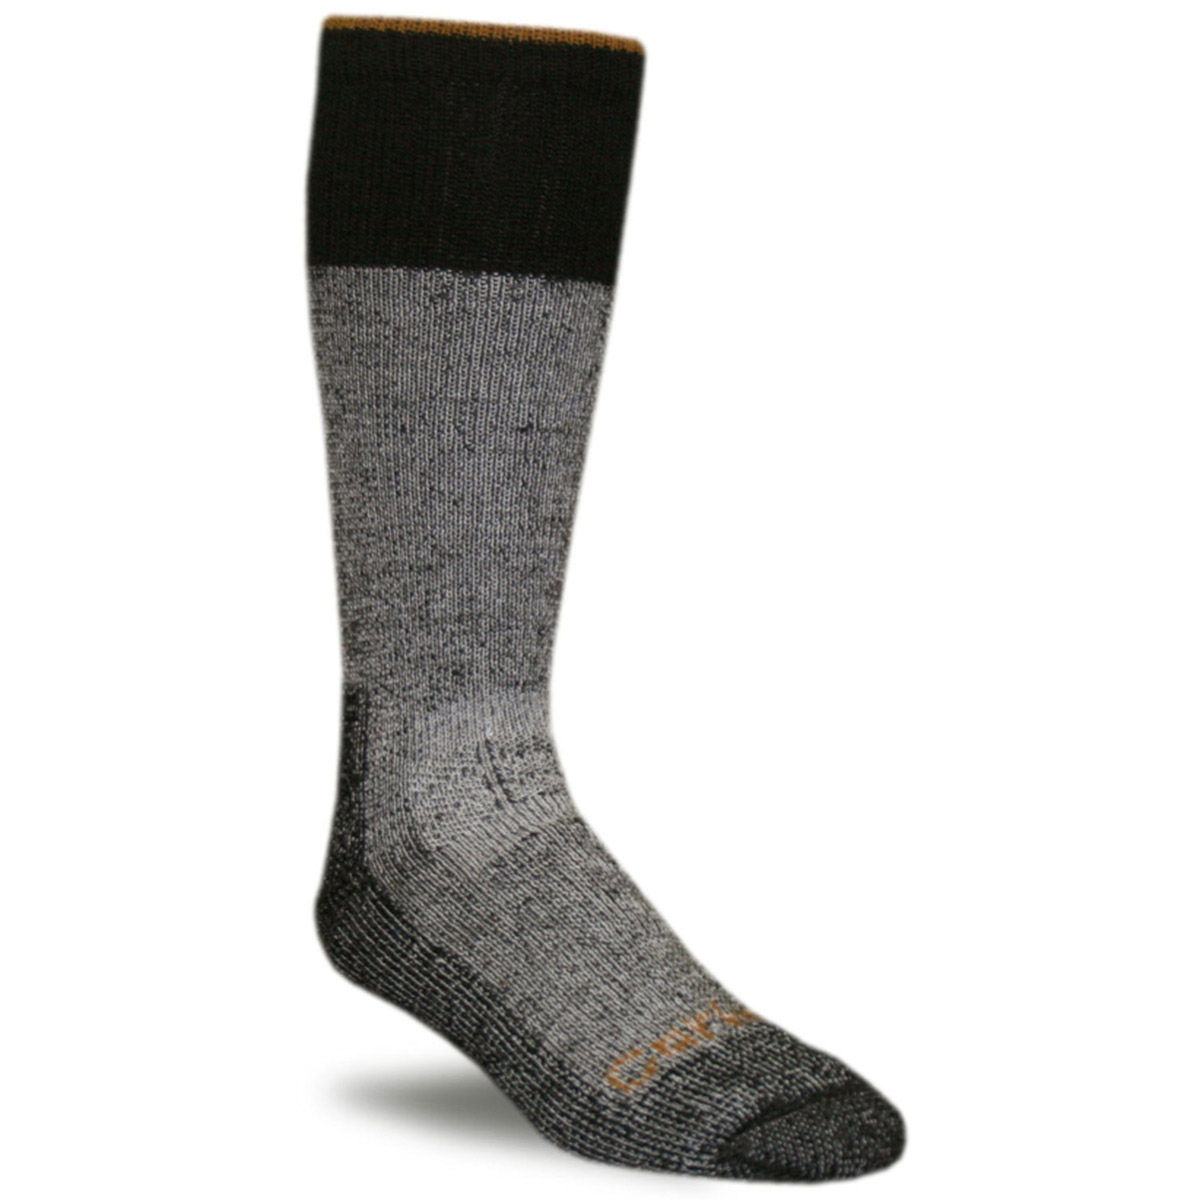 Carhartt Men's Winter Boot Socks